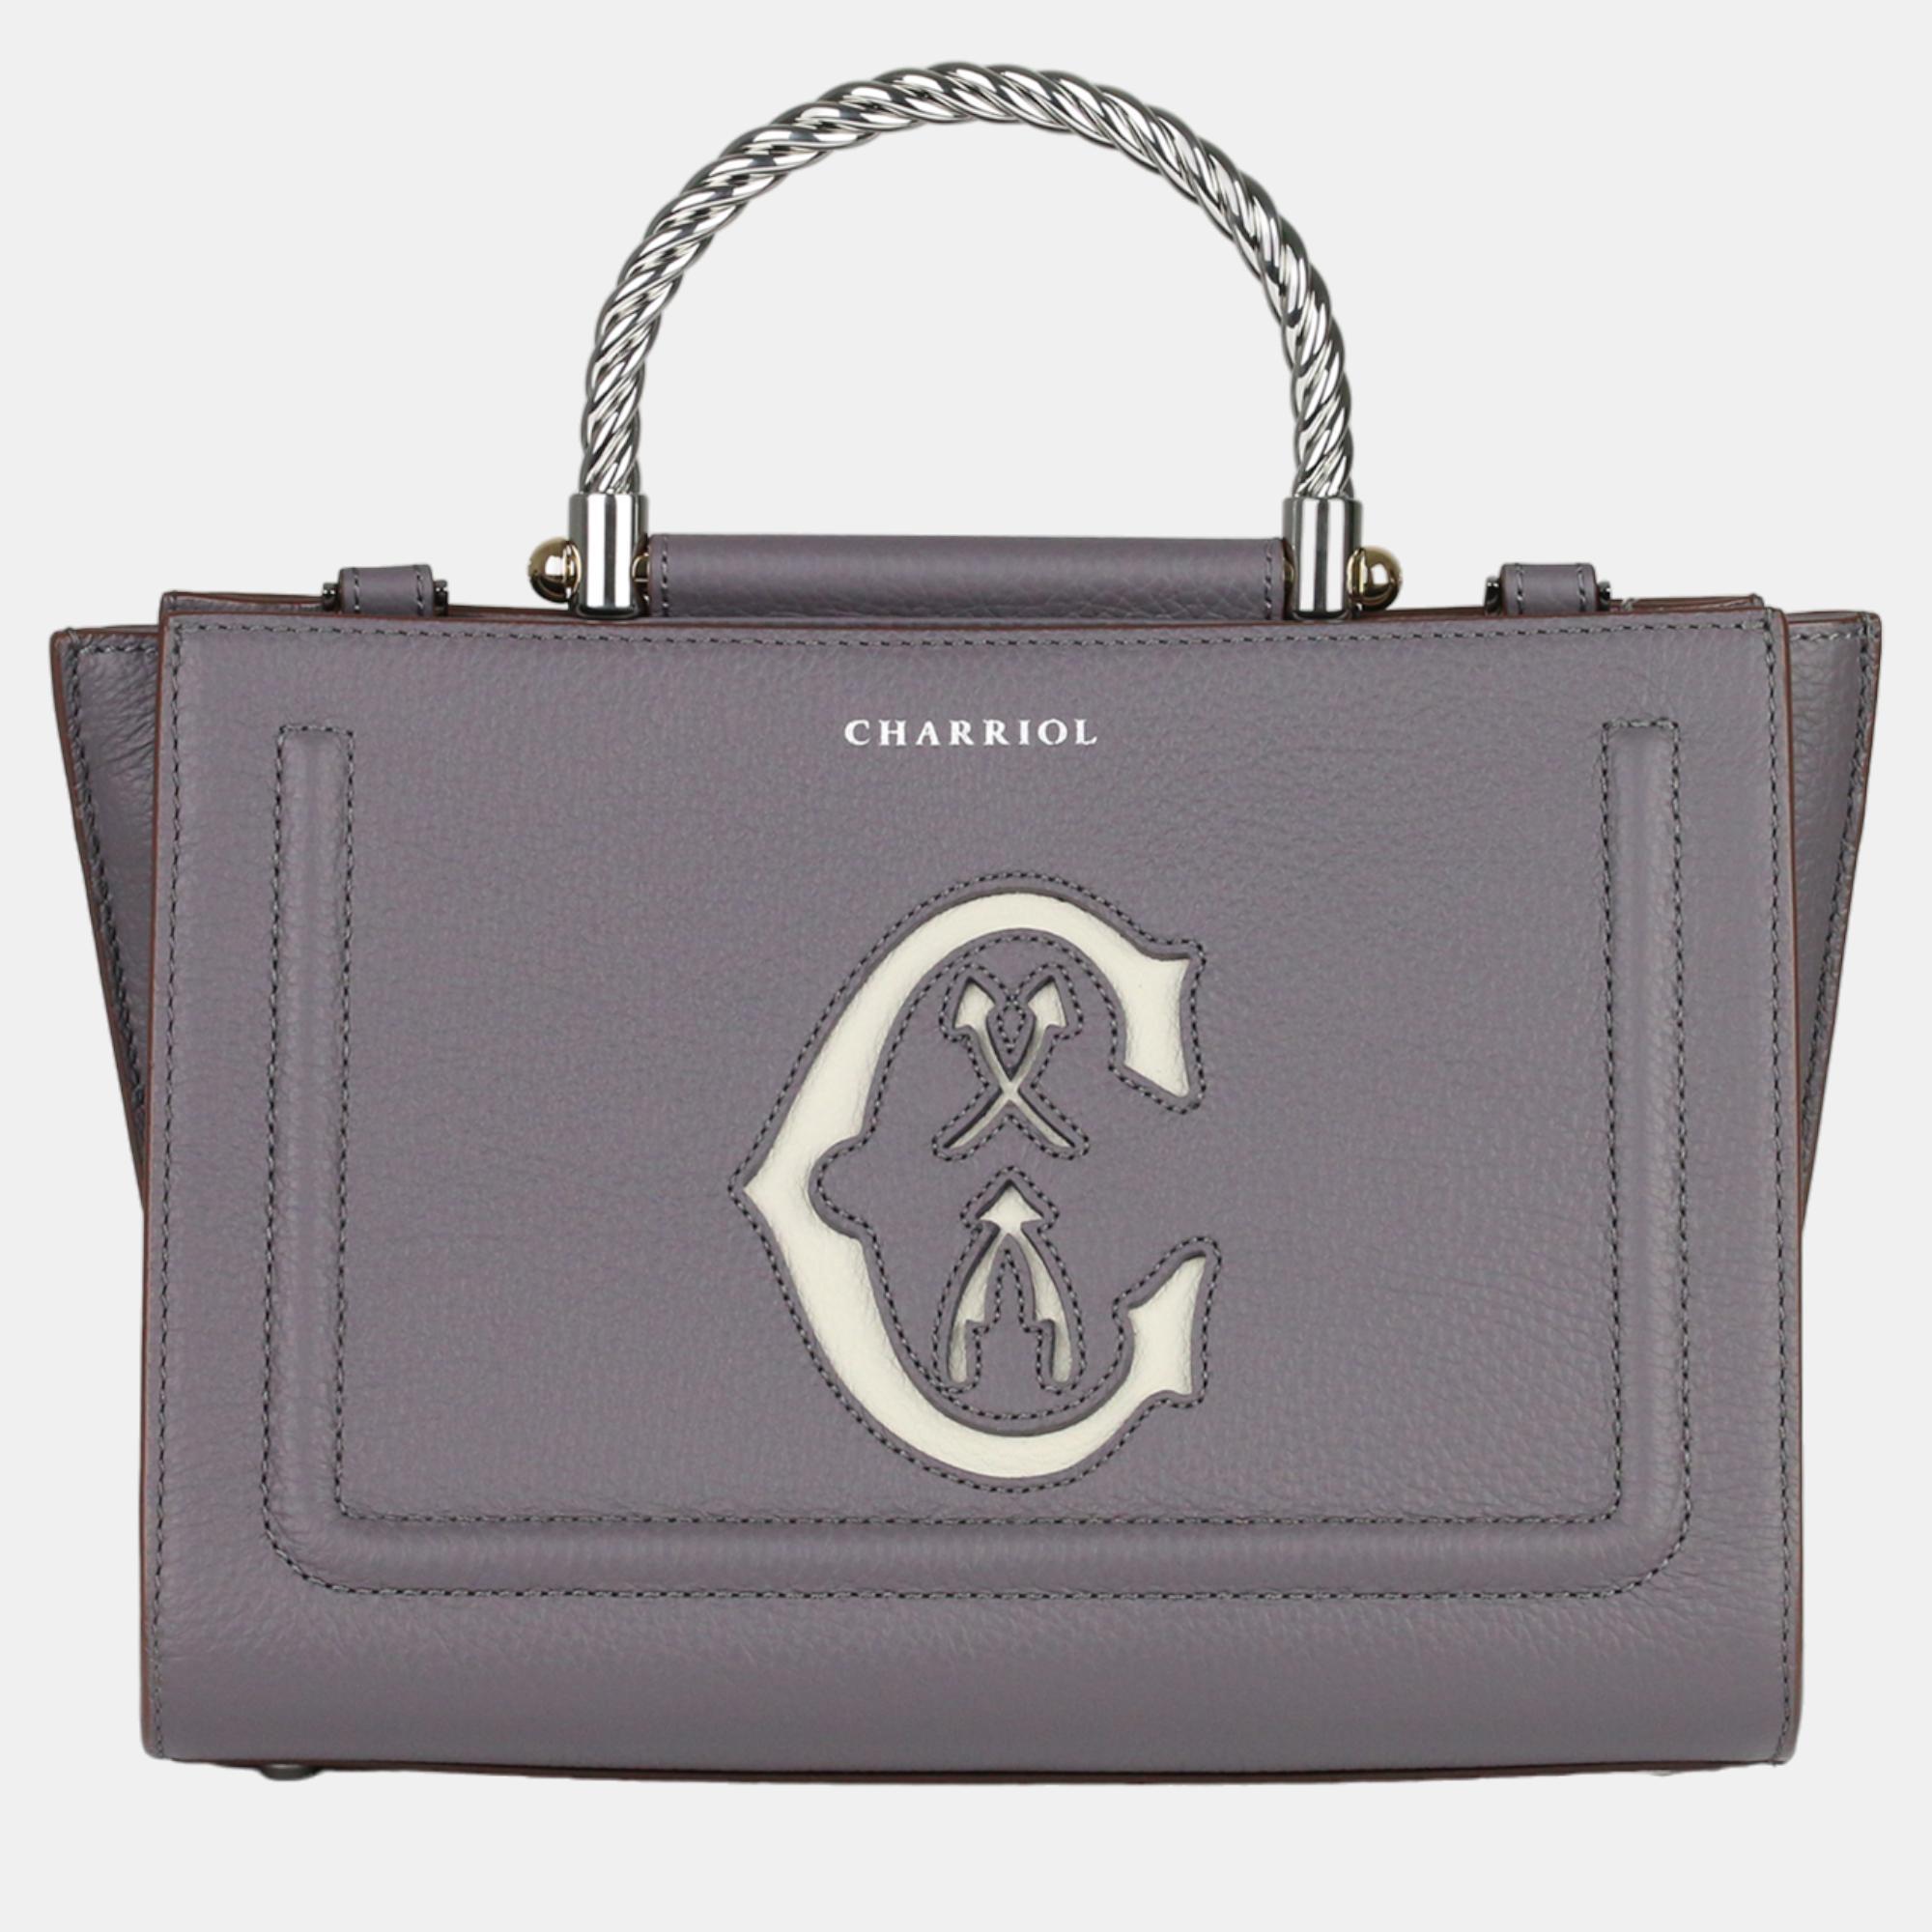 Charriol storm grey leather marie olga handbag